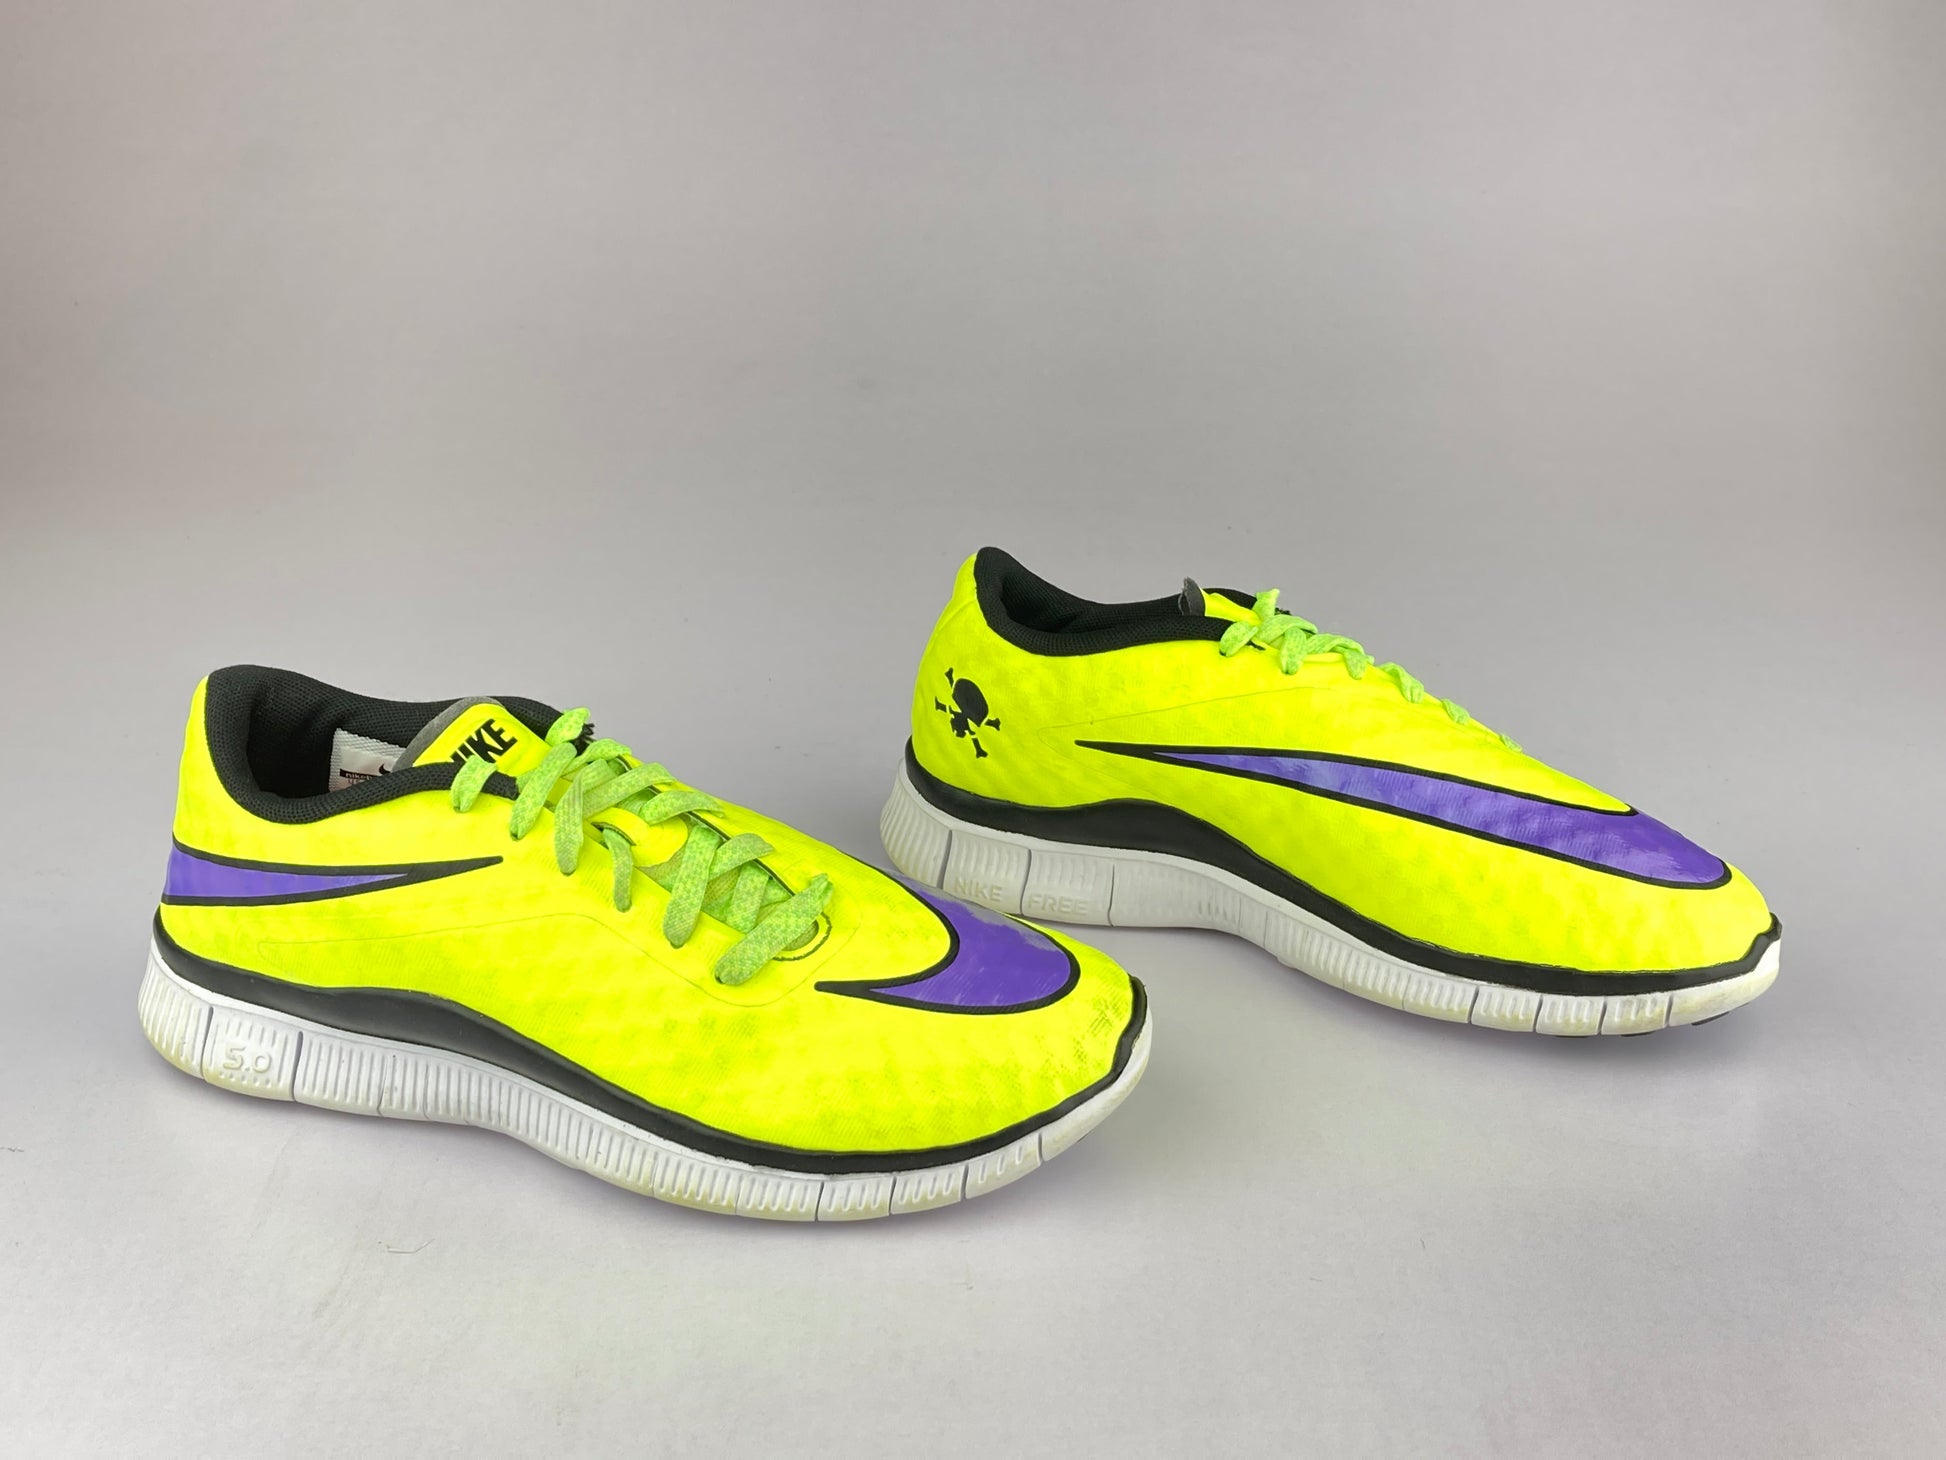 Nike Free Hypervenom 'Volt/Electric Green' 705390-700